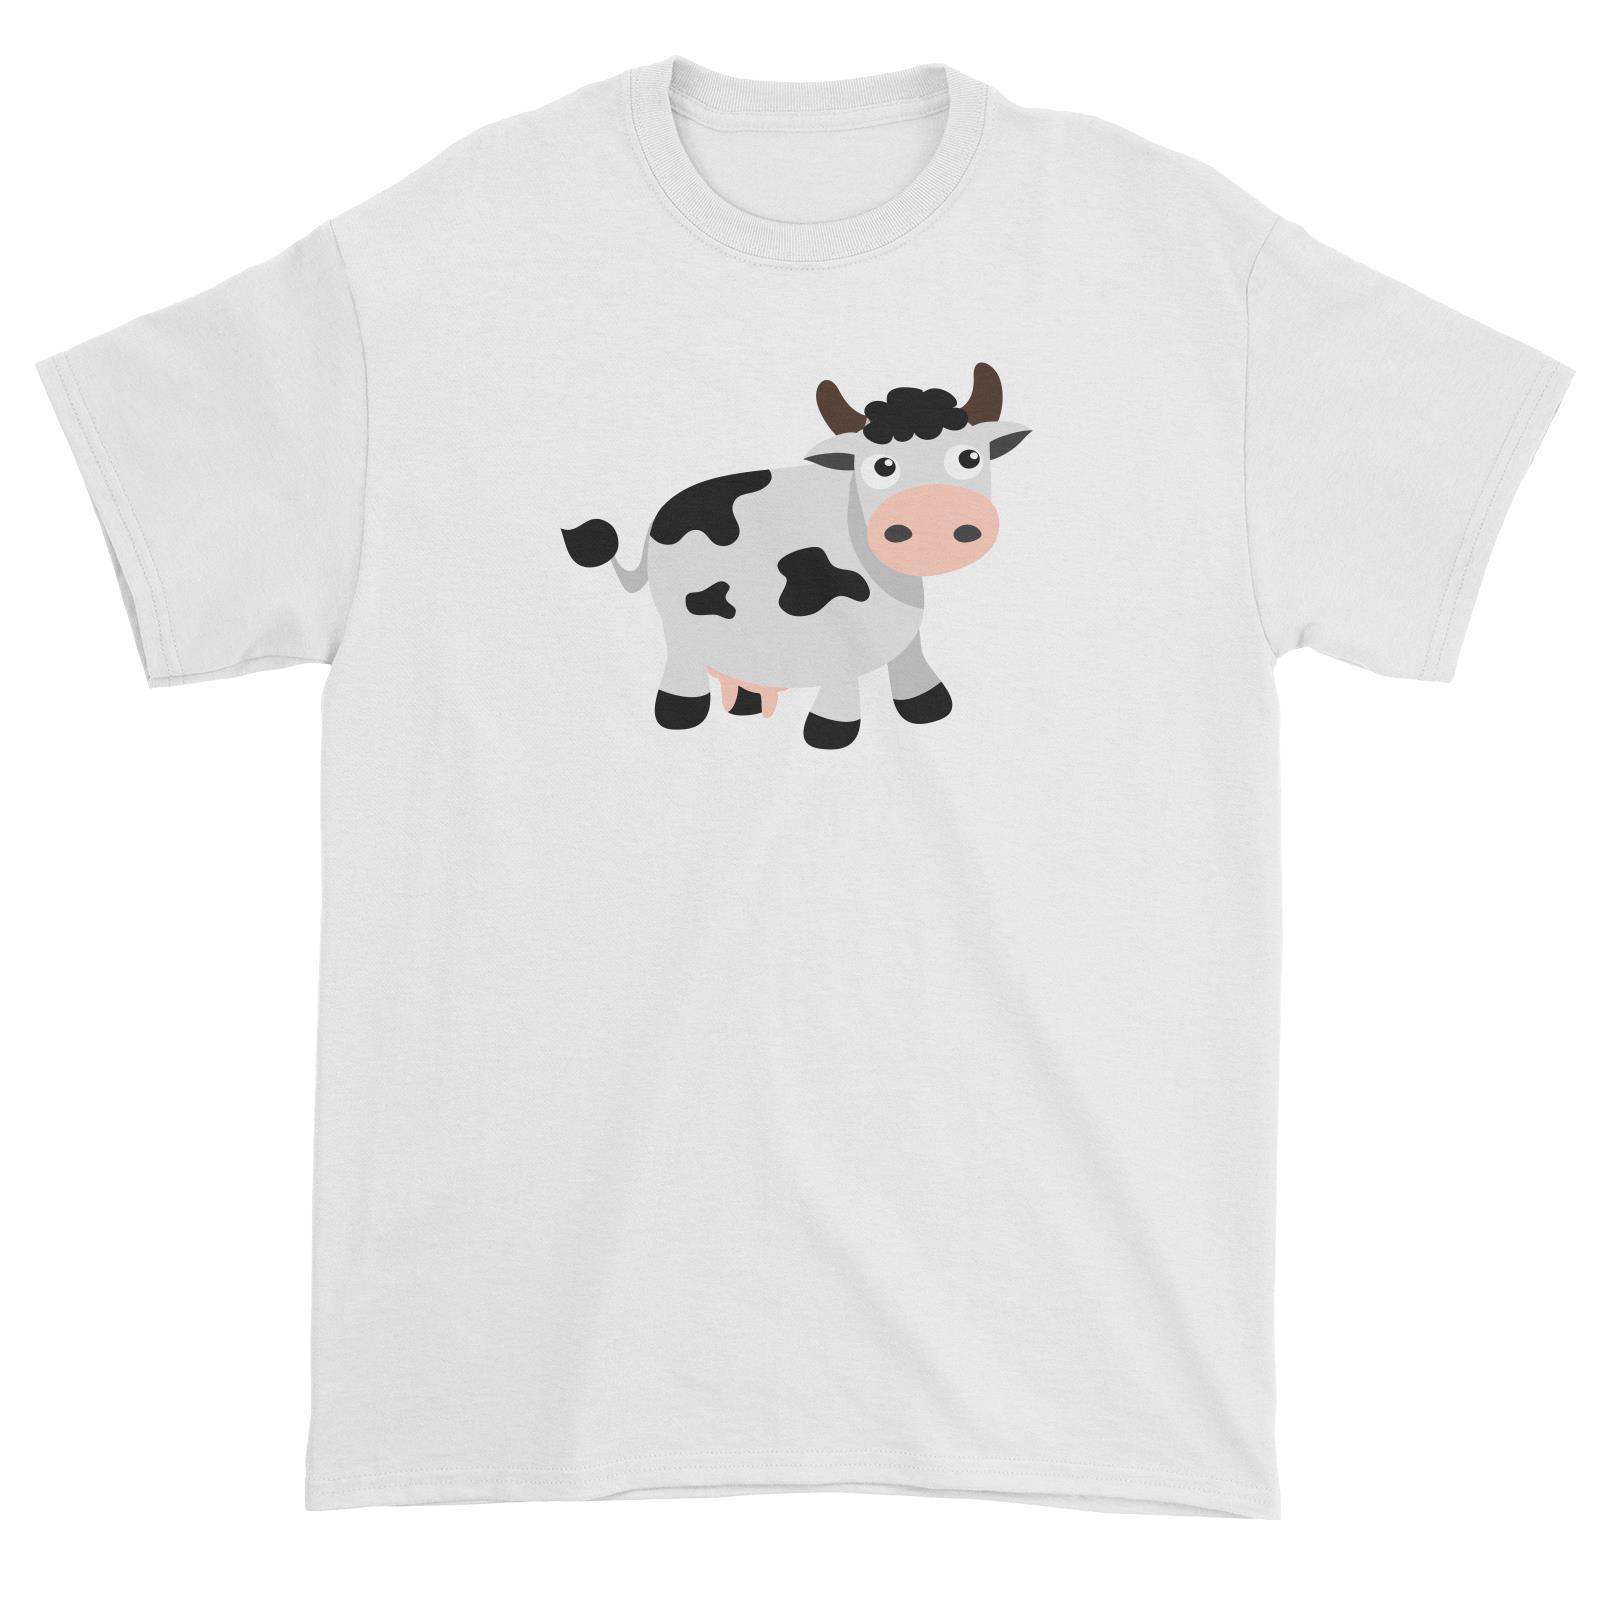 Farm Cow Addname Unisex T-Shirt